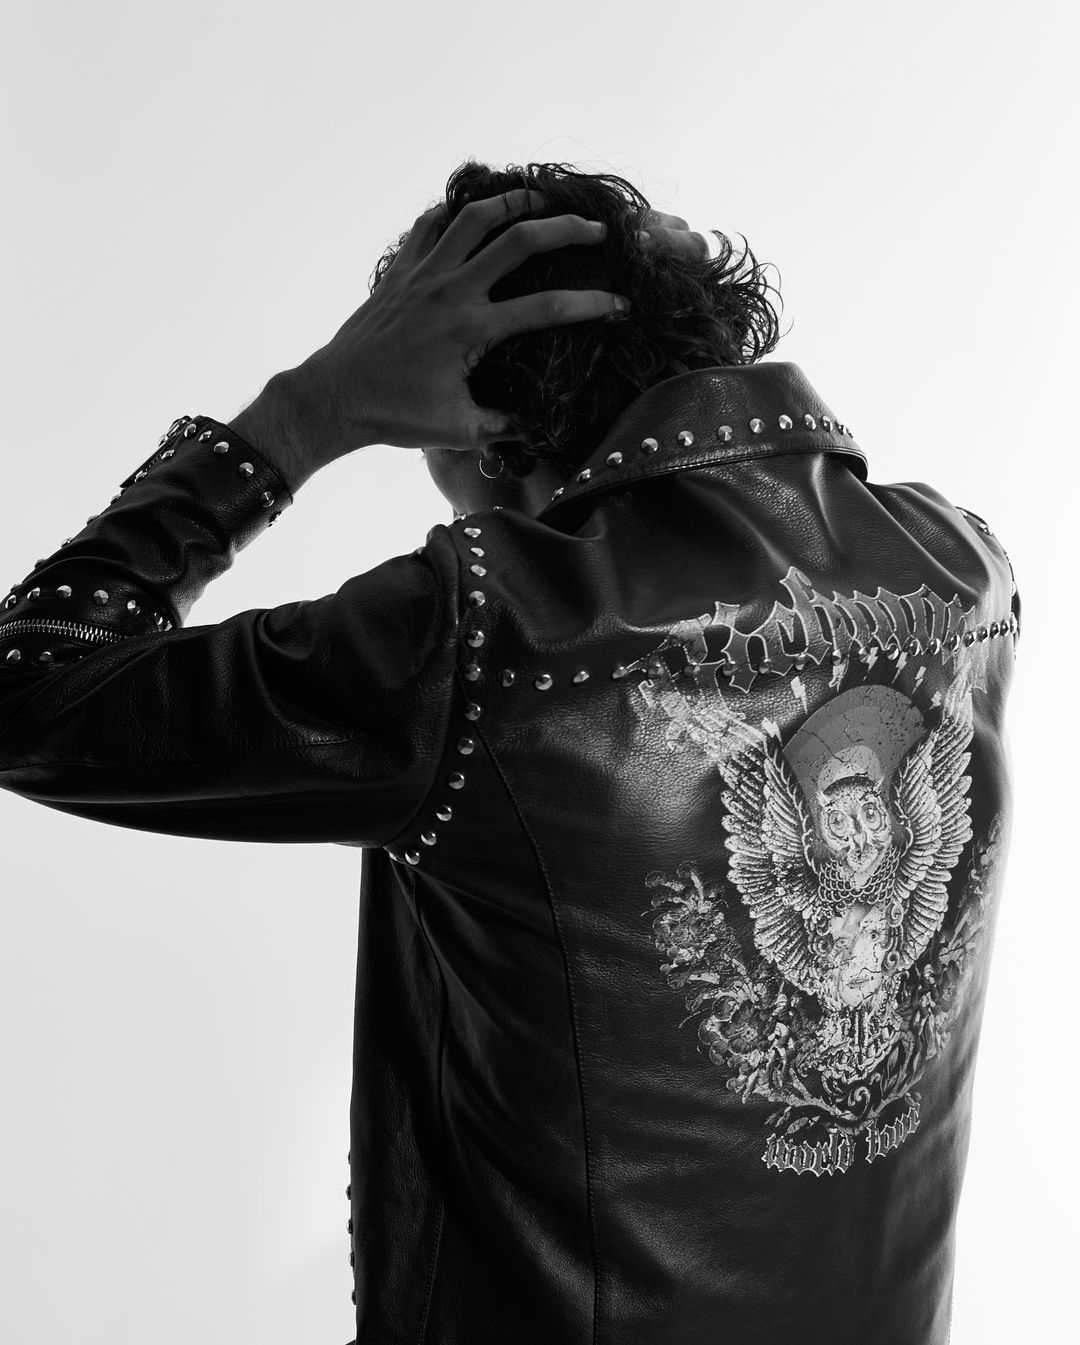 John Richmond - “World tour” leather jacket.
#officialjohnrichmond